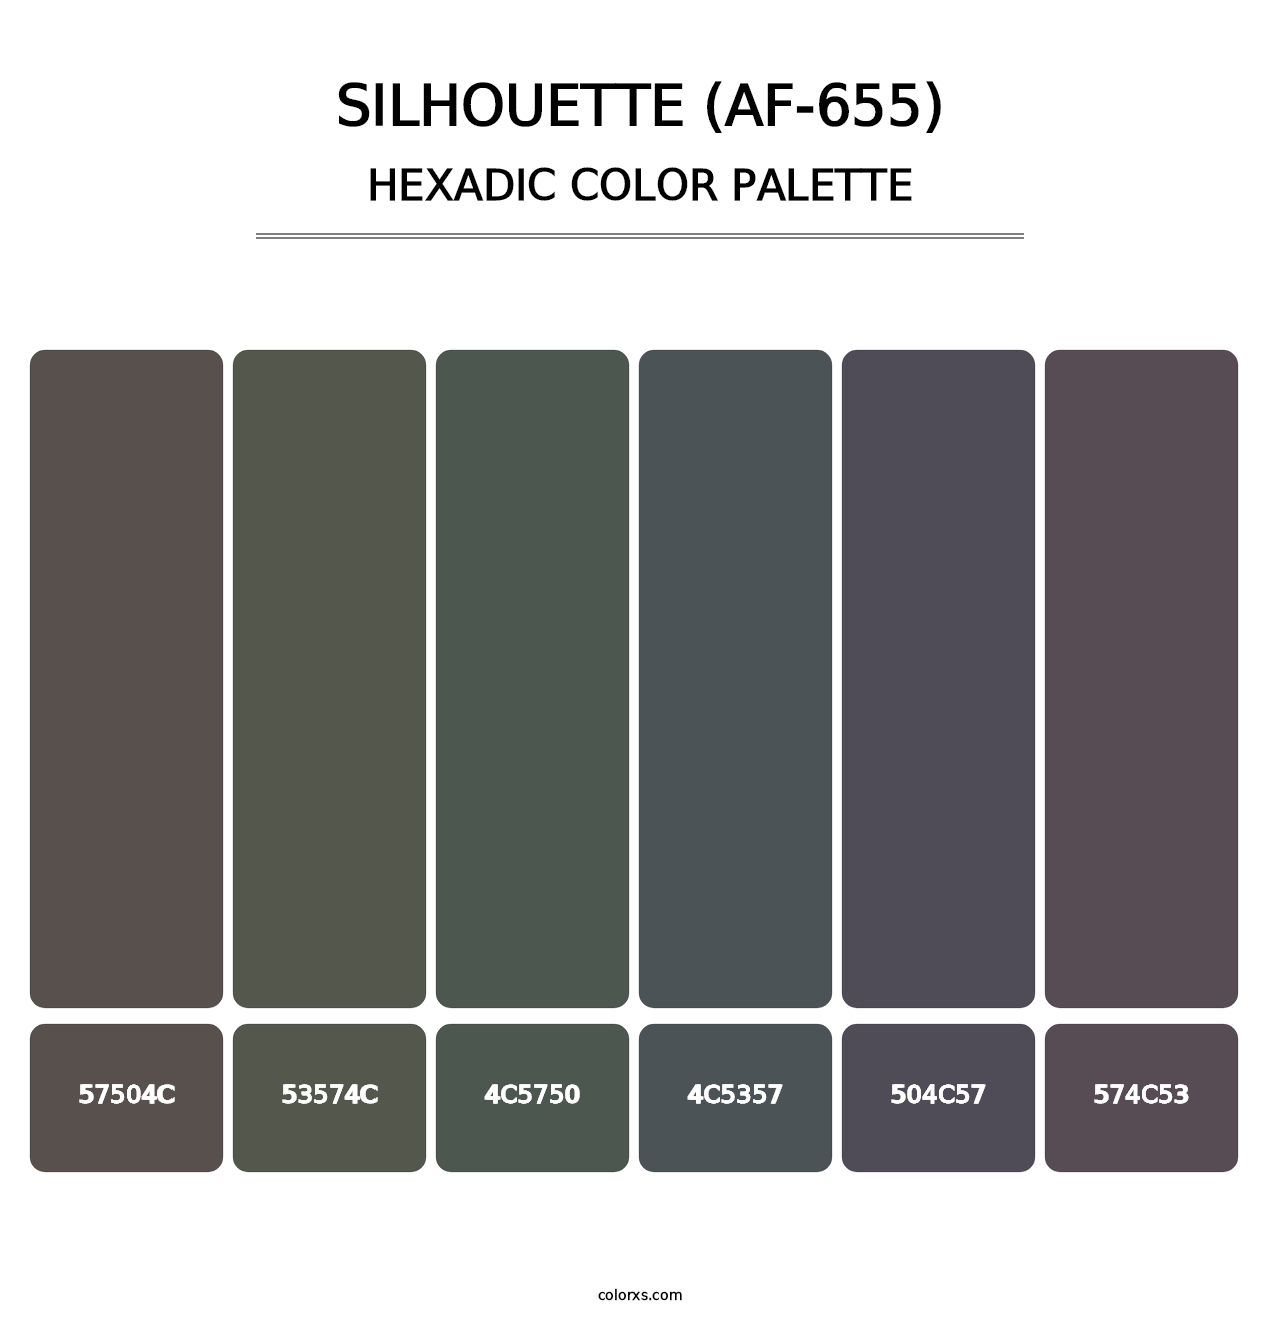 Silhouette (AF-655) - Hexadic Color Palette